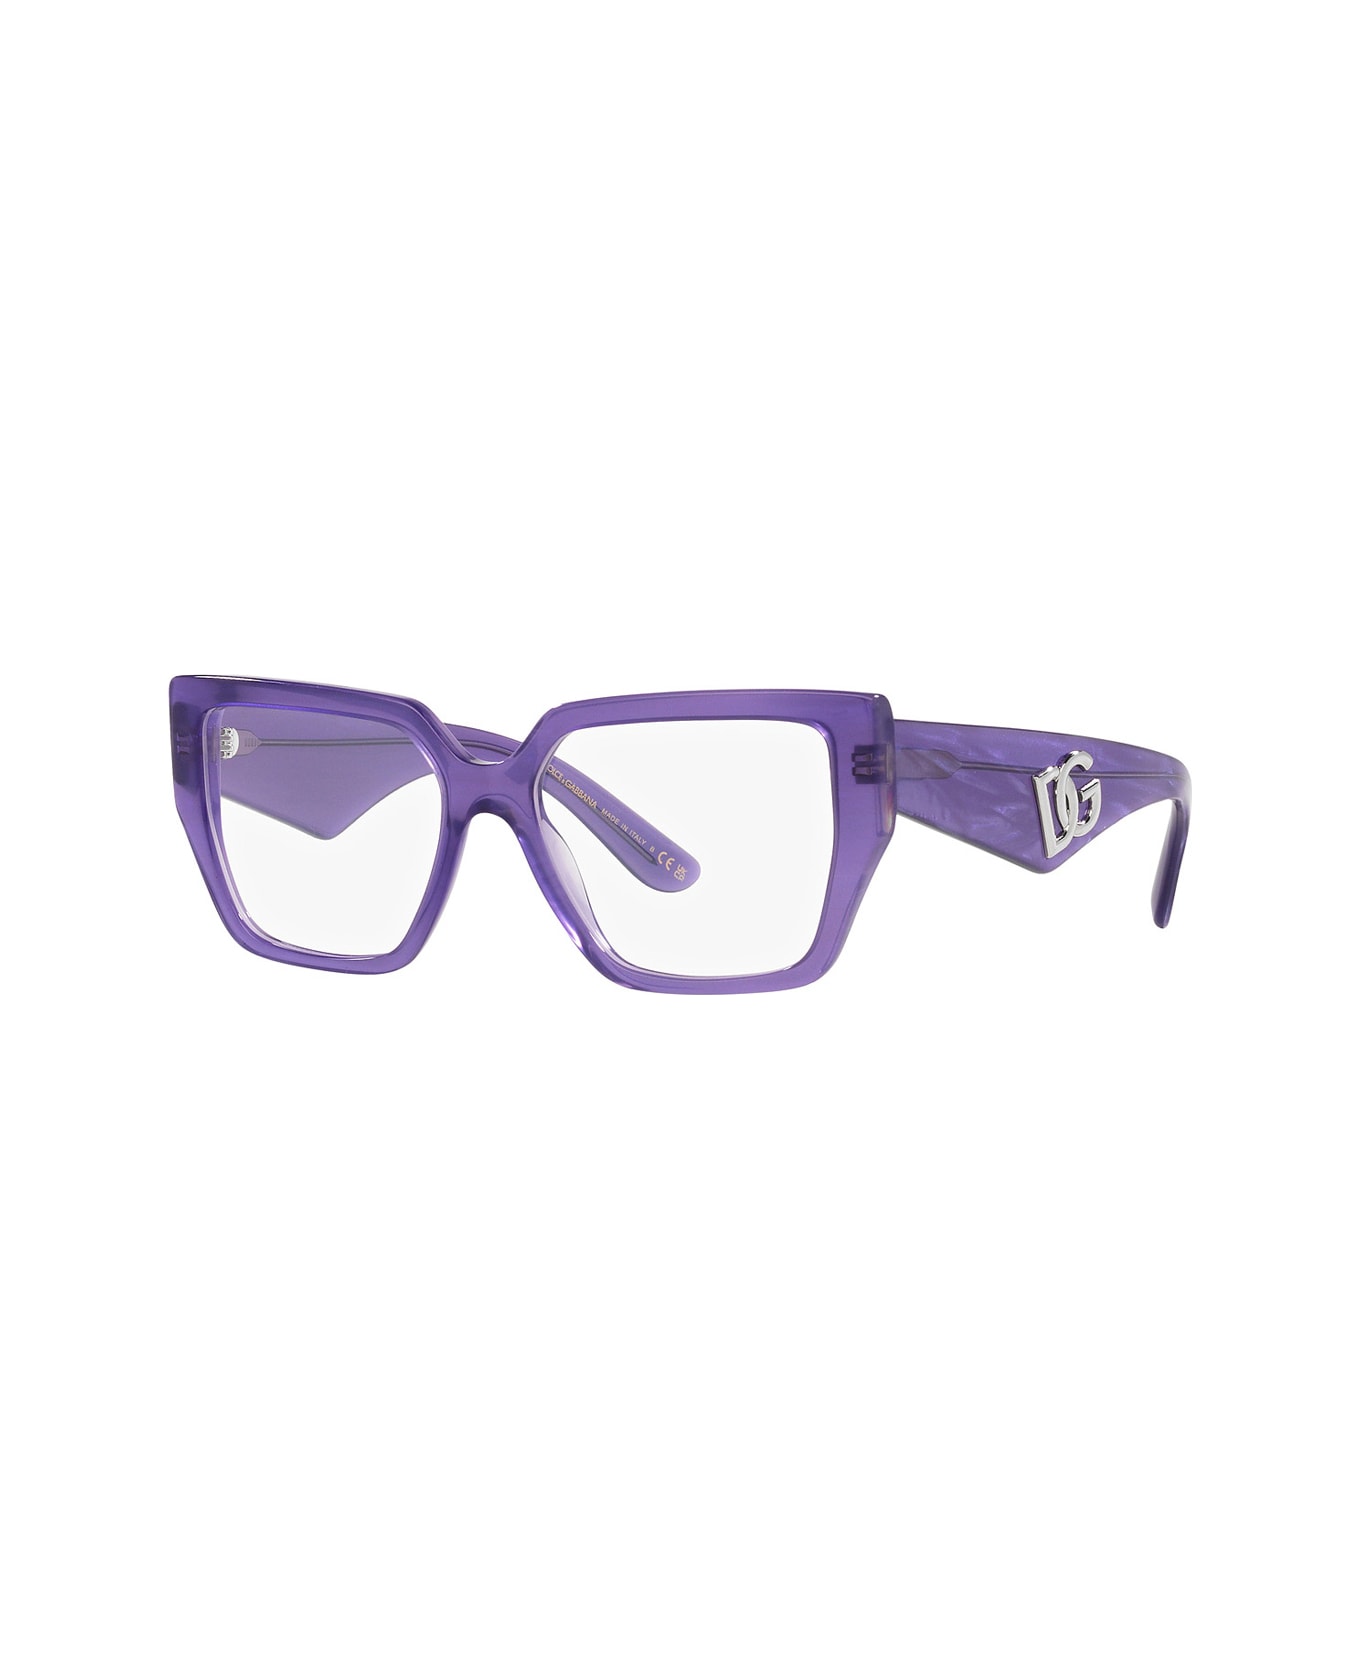 Dolce & Gabbana Eyewear Dg3373 3407 Glasses - Viola